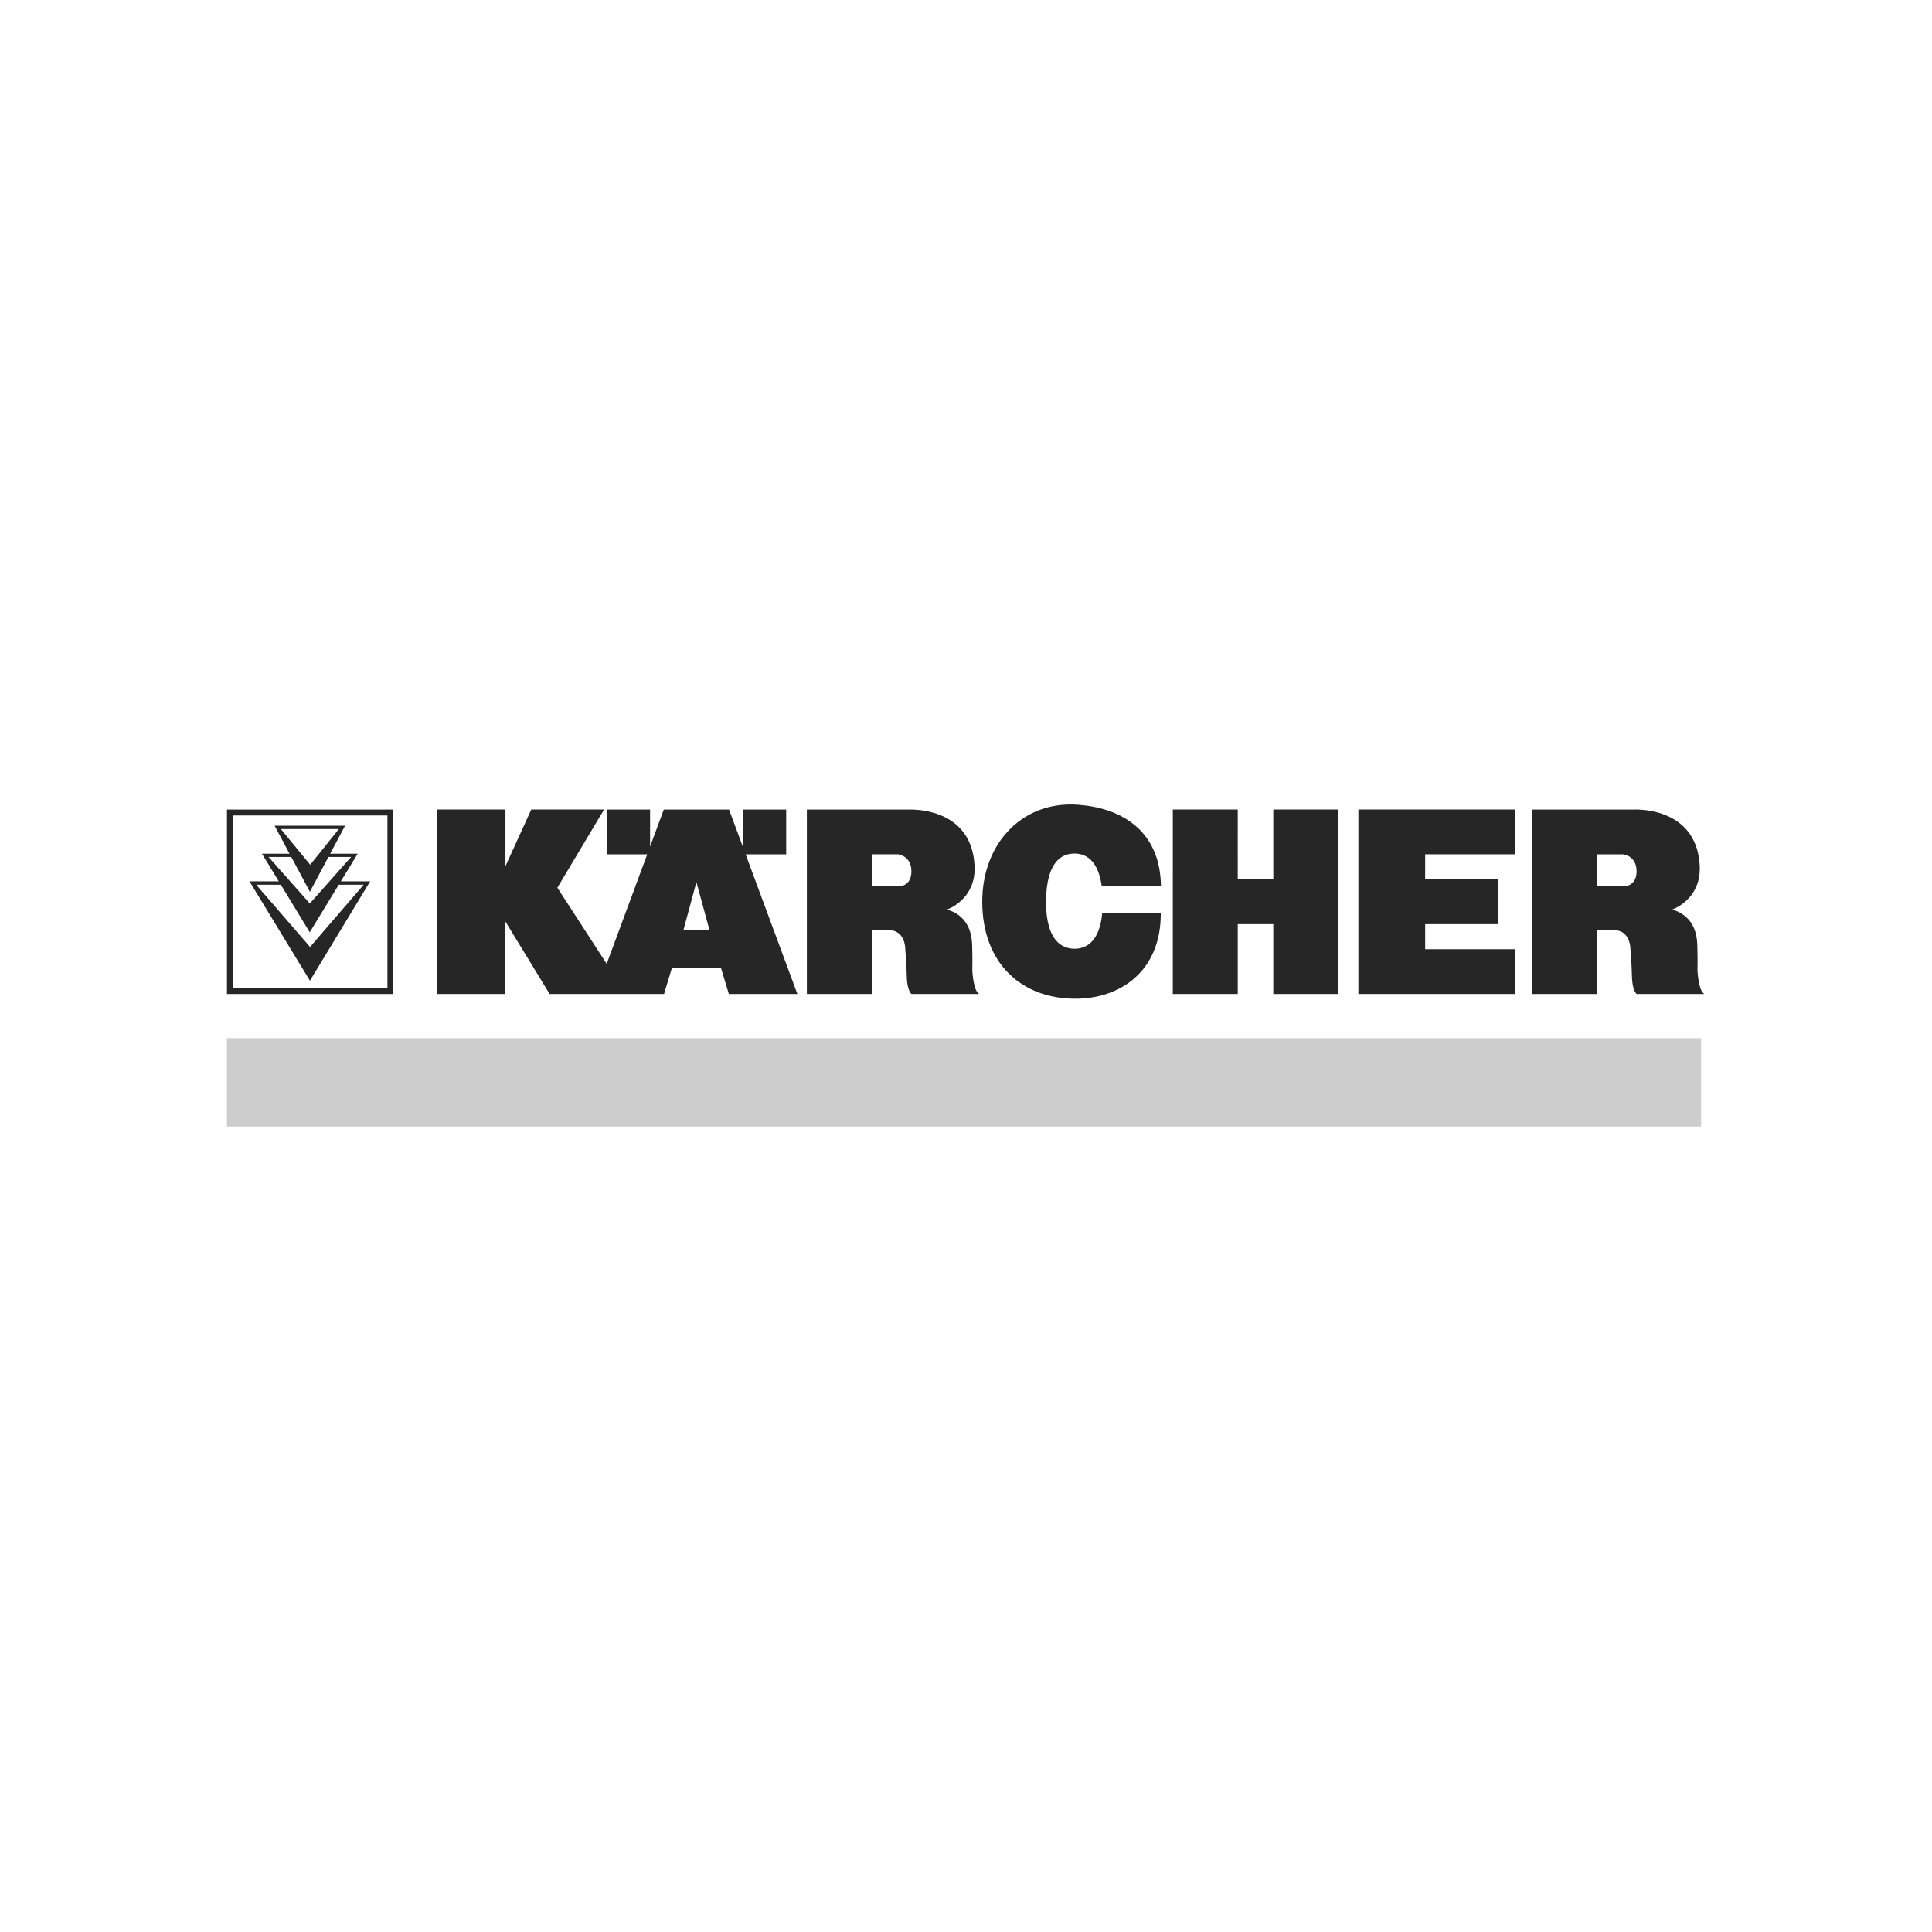 KÄRCHER_logo25k